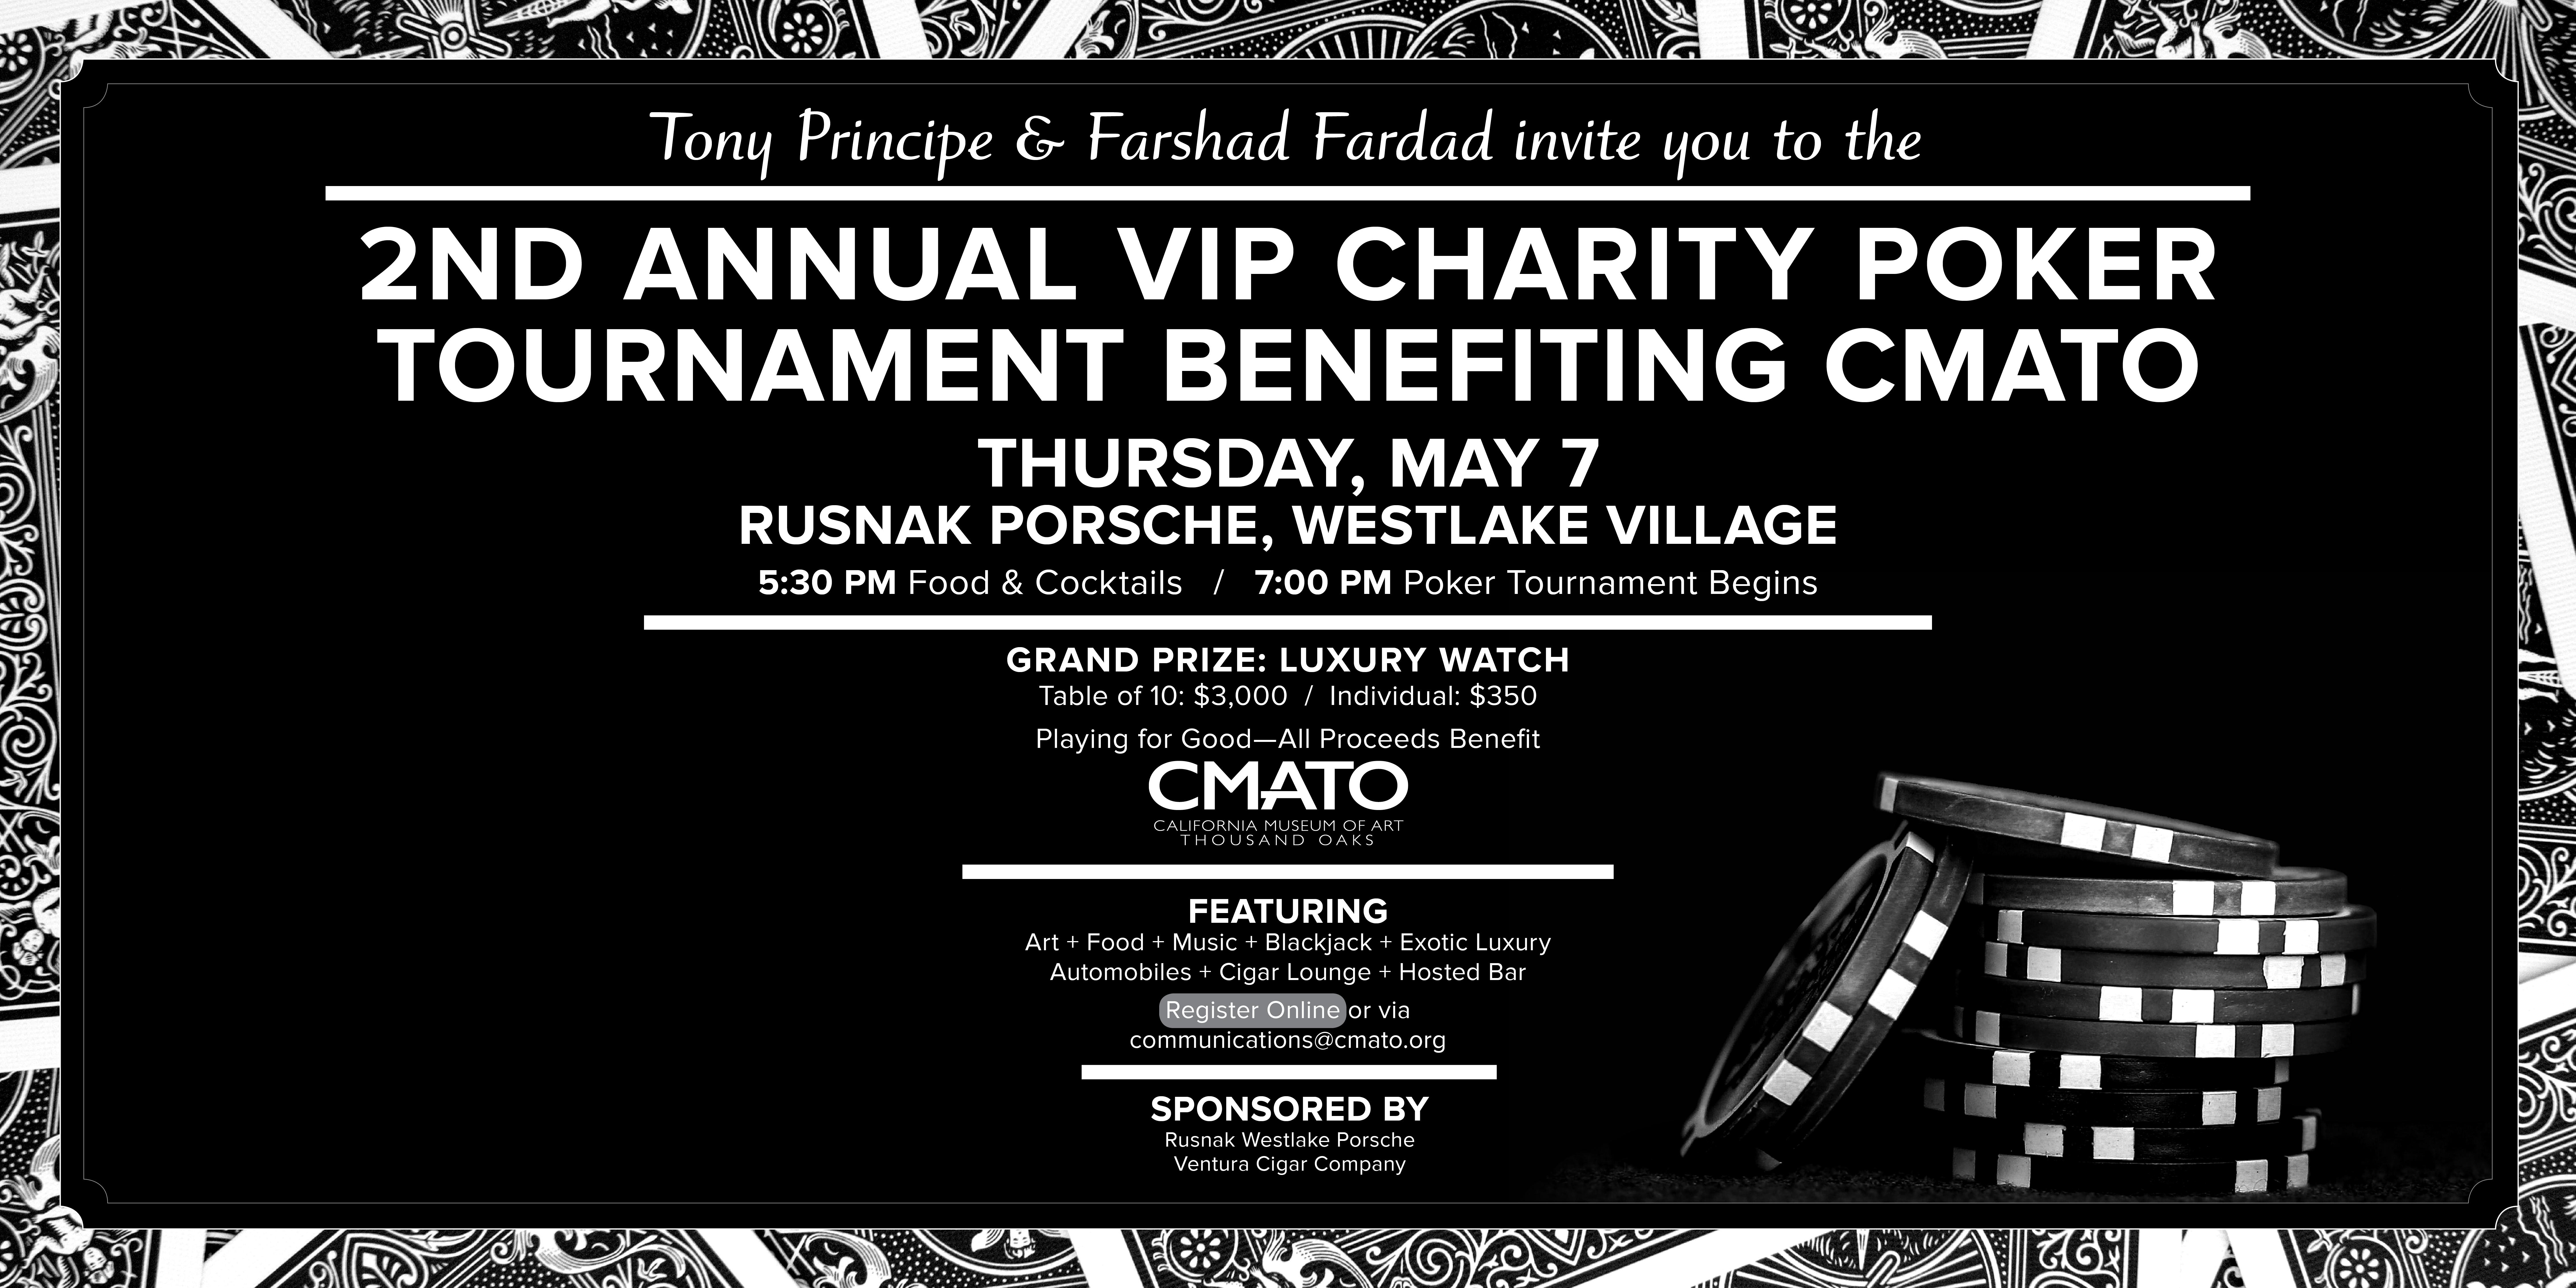 VIP Charity Poker Tournament hosted by Tony Principe & Farshad Fardad